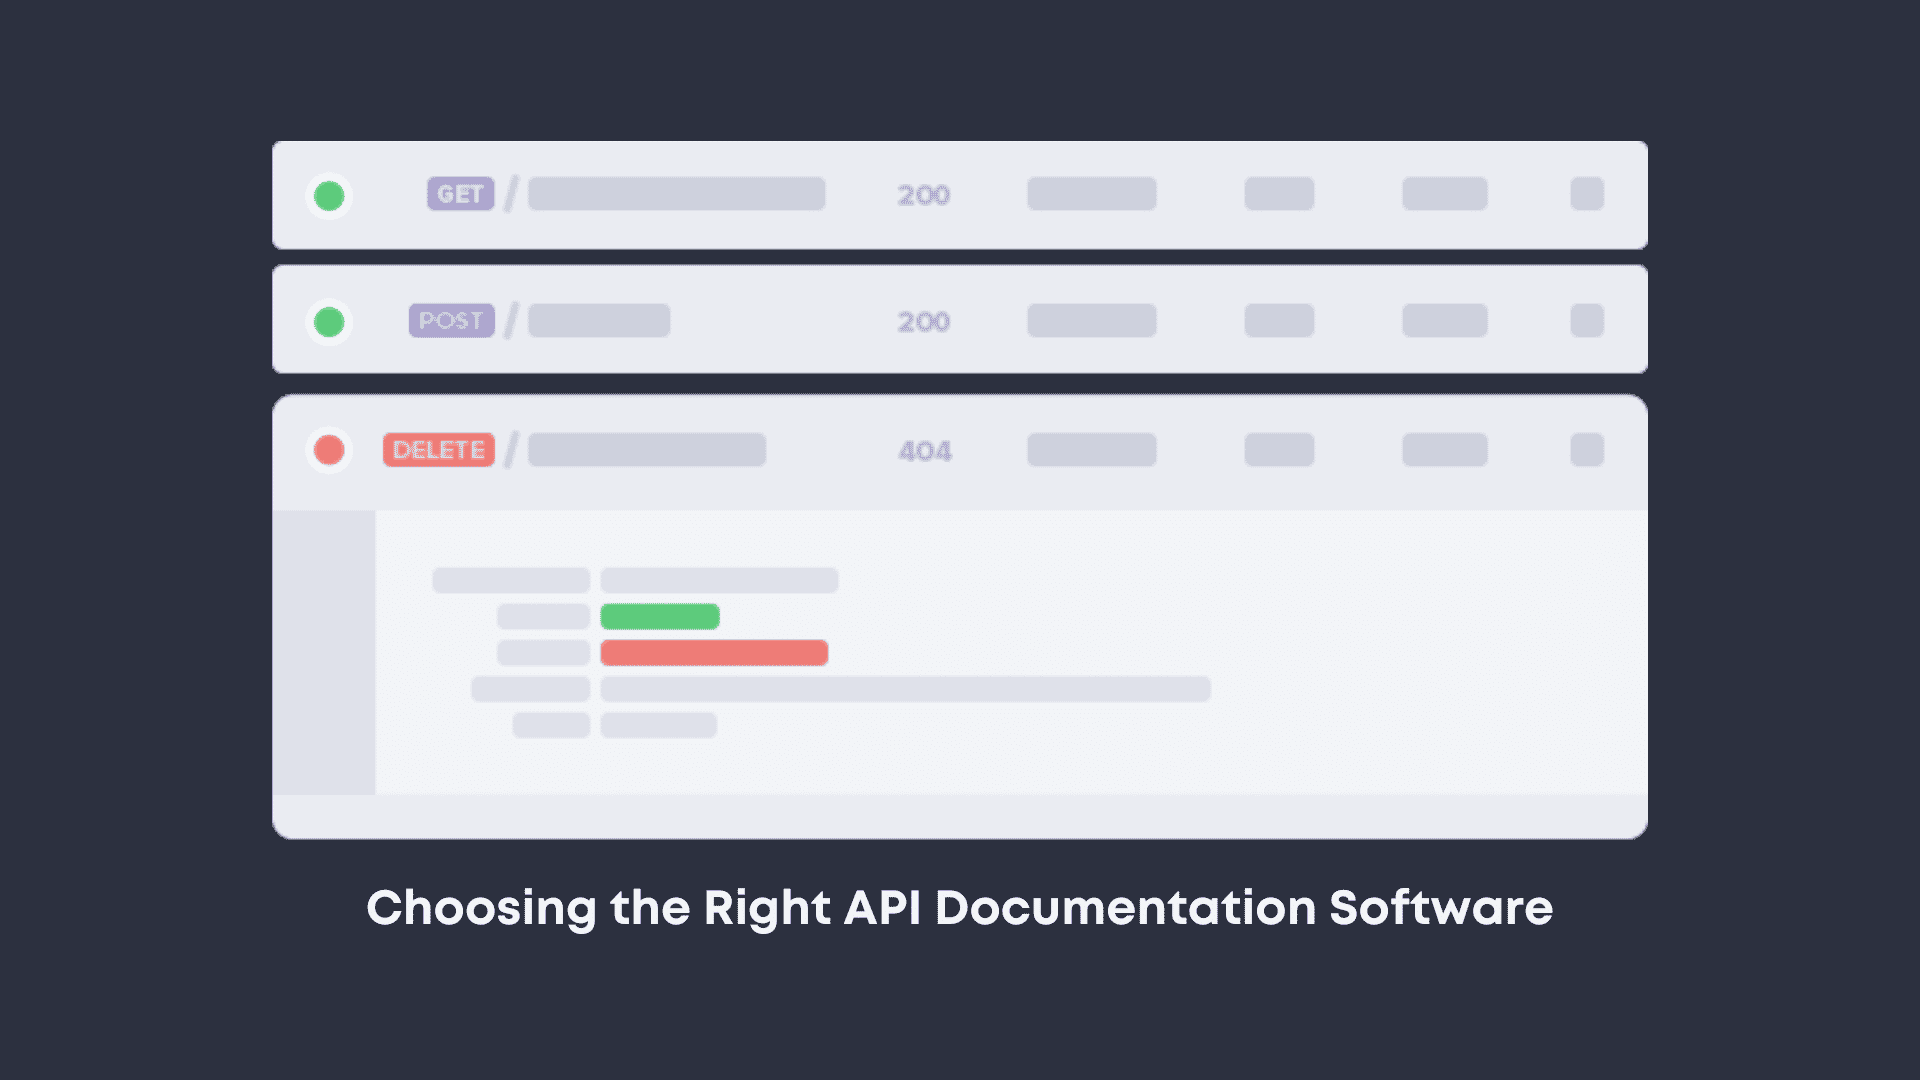 How do you choose the right API documentation software for your needs